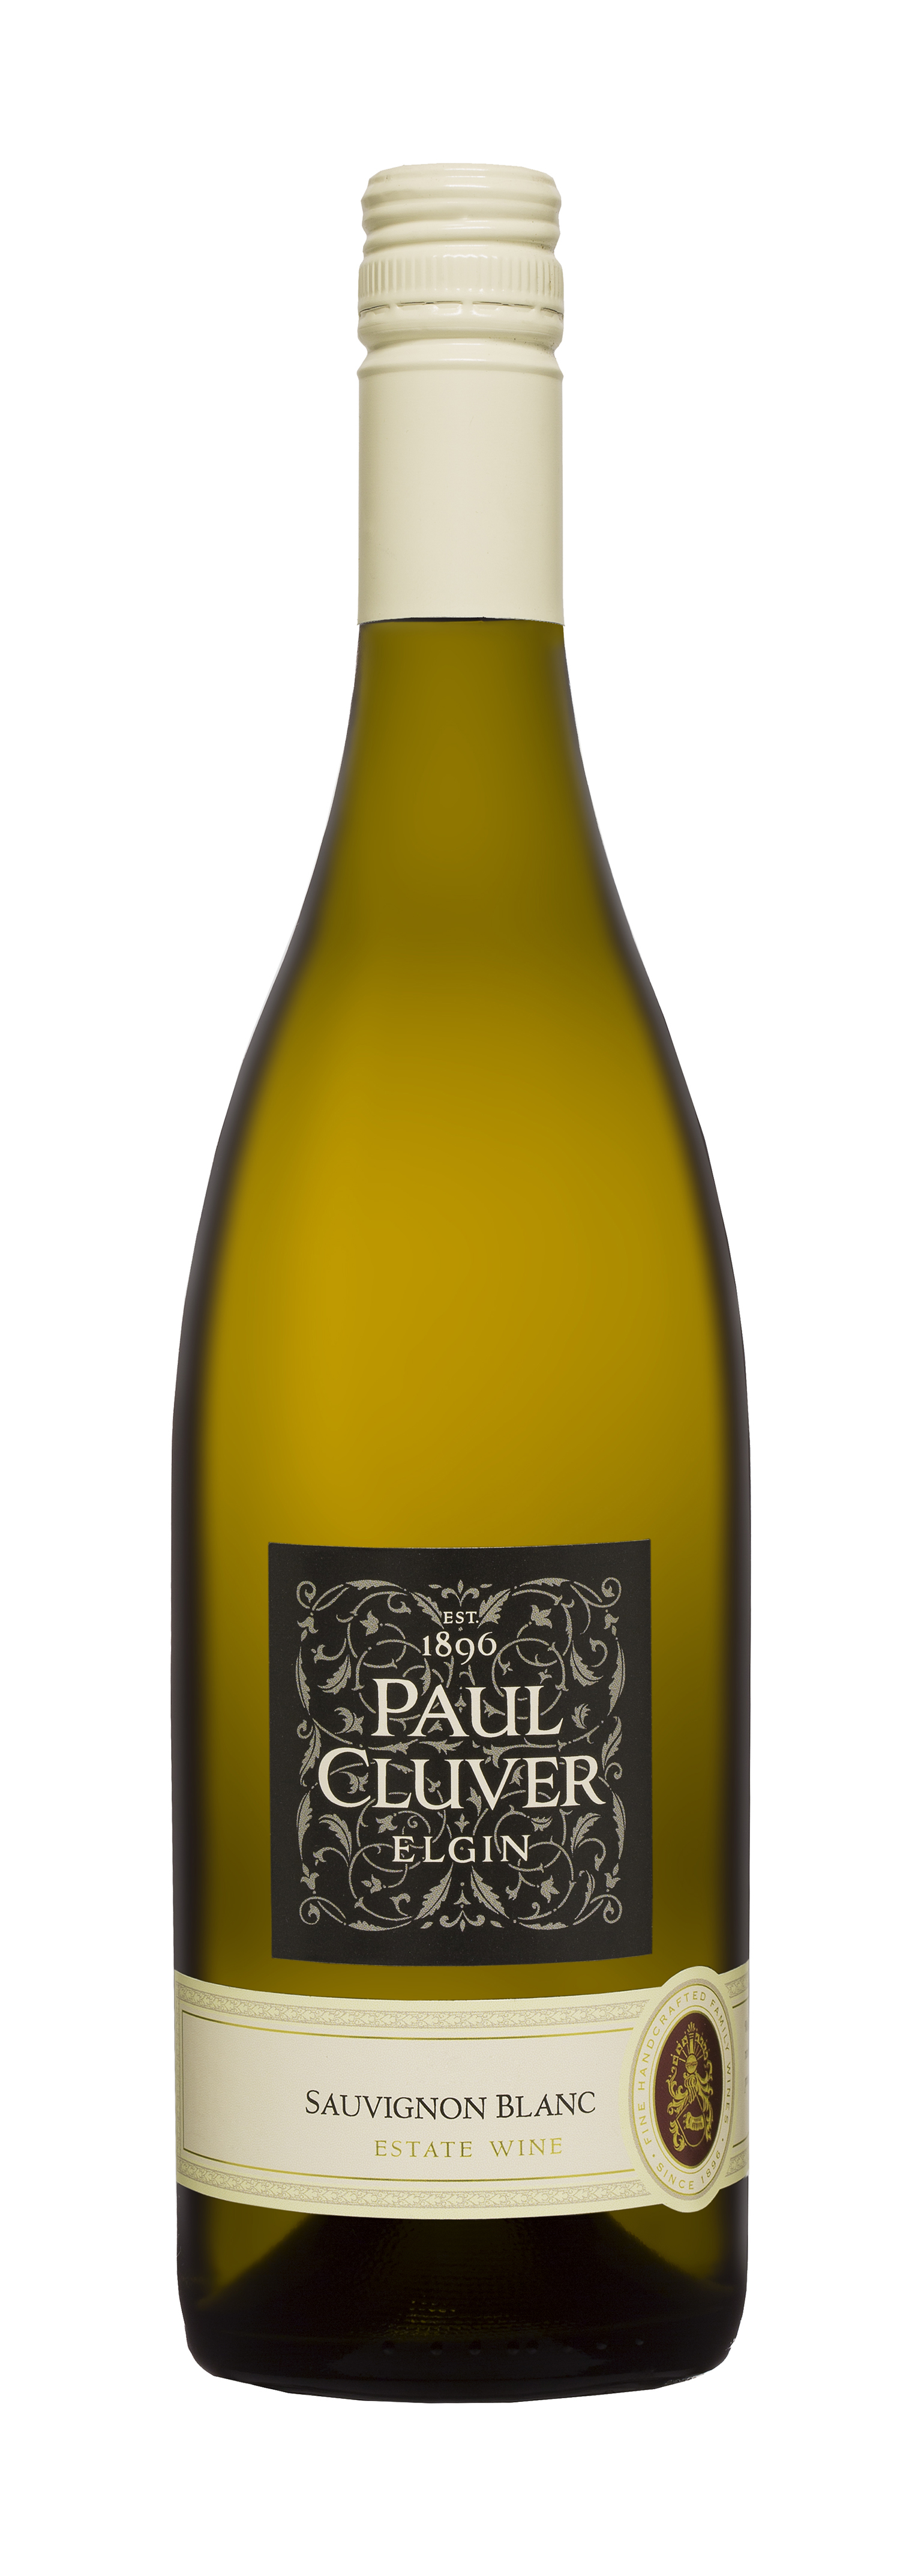 2015 Paul Cluver Sauvignon Blanc South Africa - click image for full description